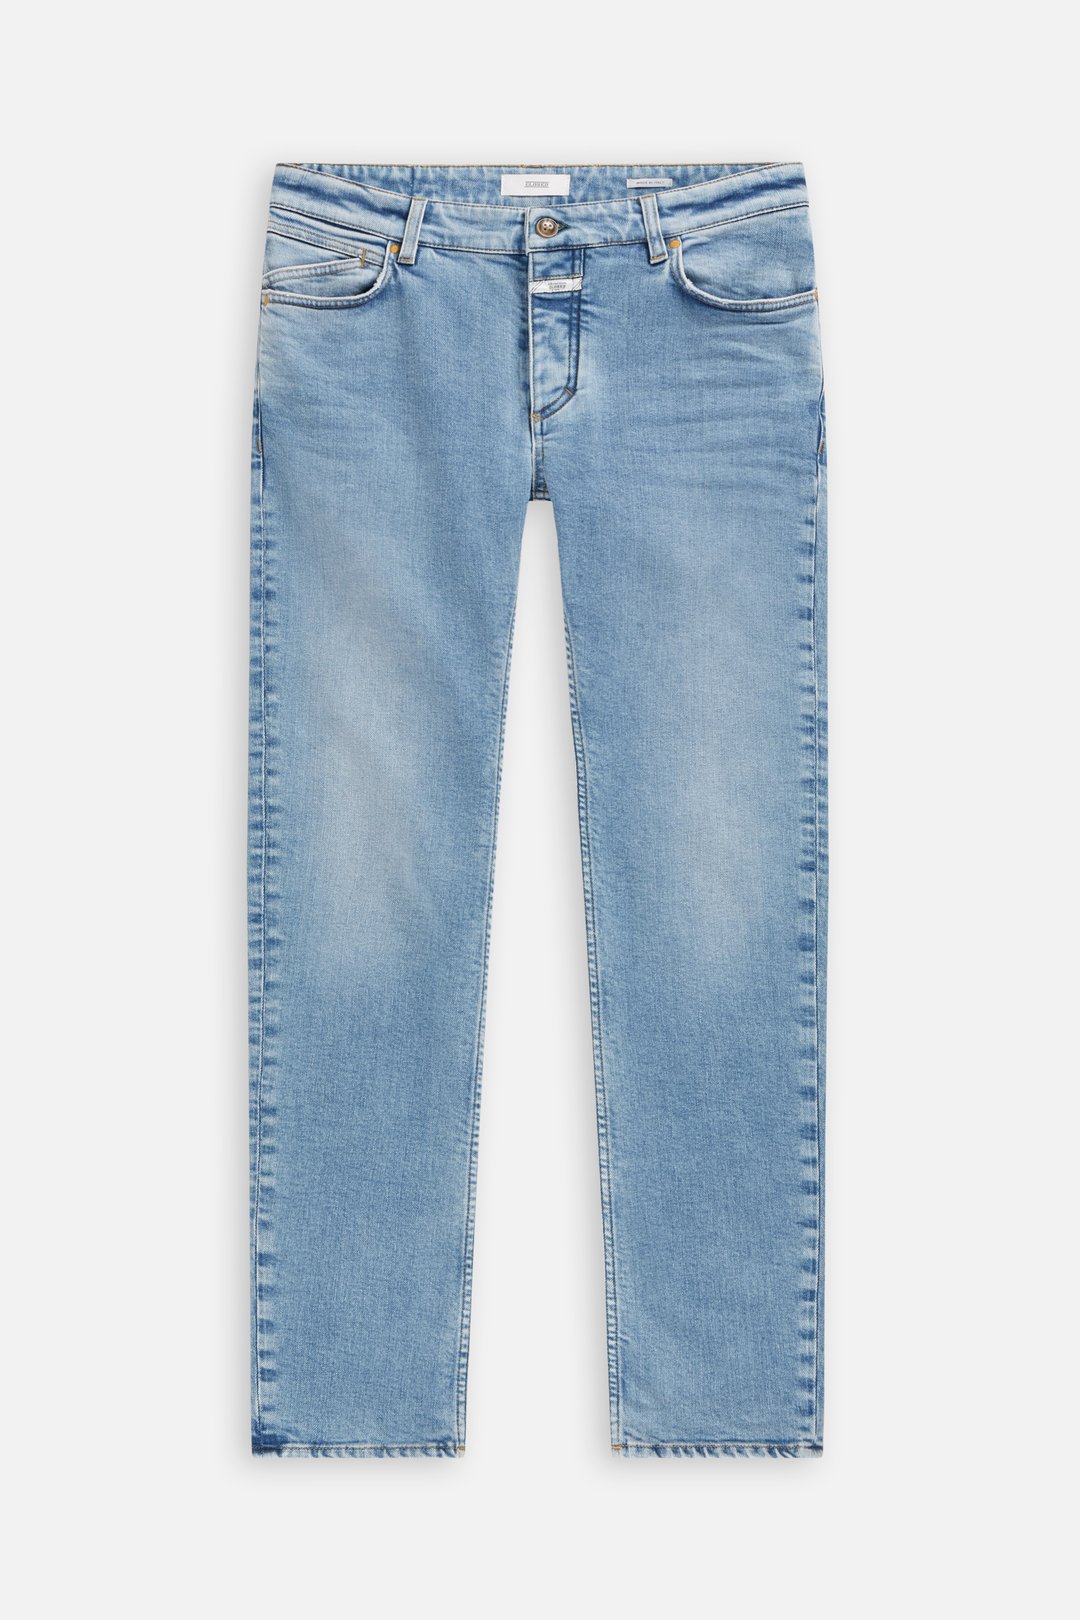 Men's New ETO Jeans Regular Fit Casual Denim Trousers Pants All Waists 